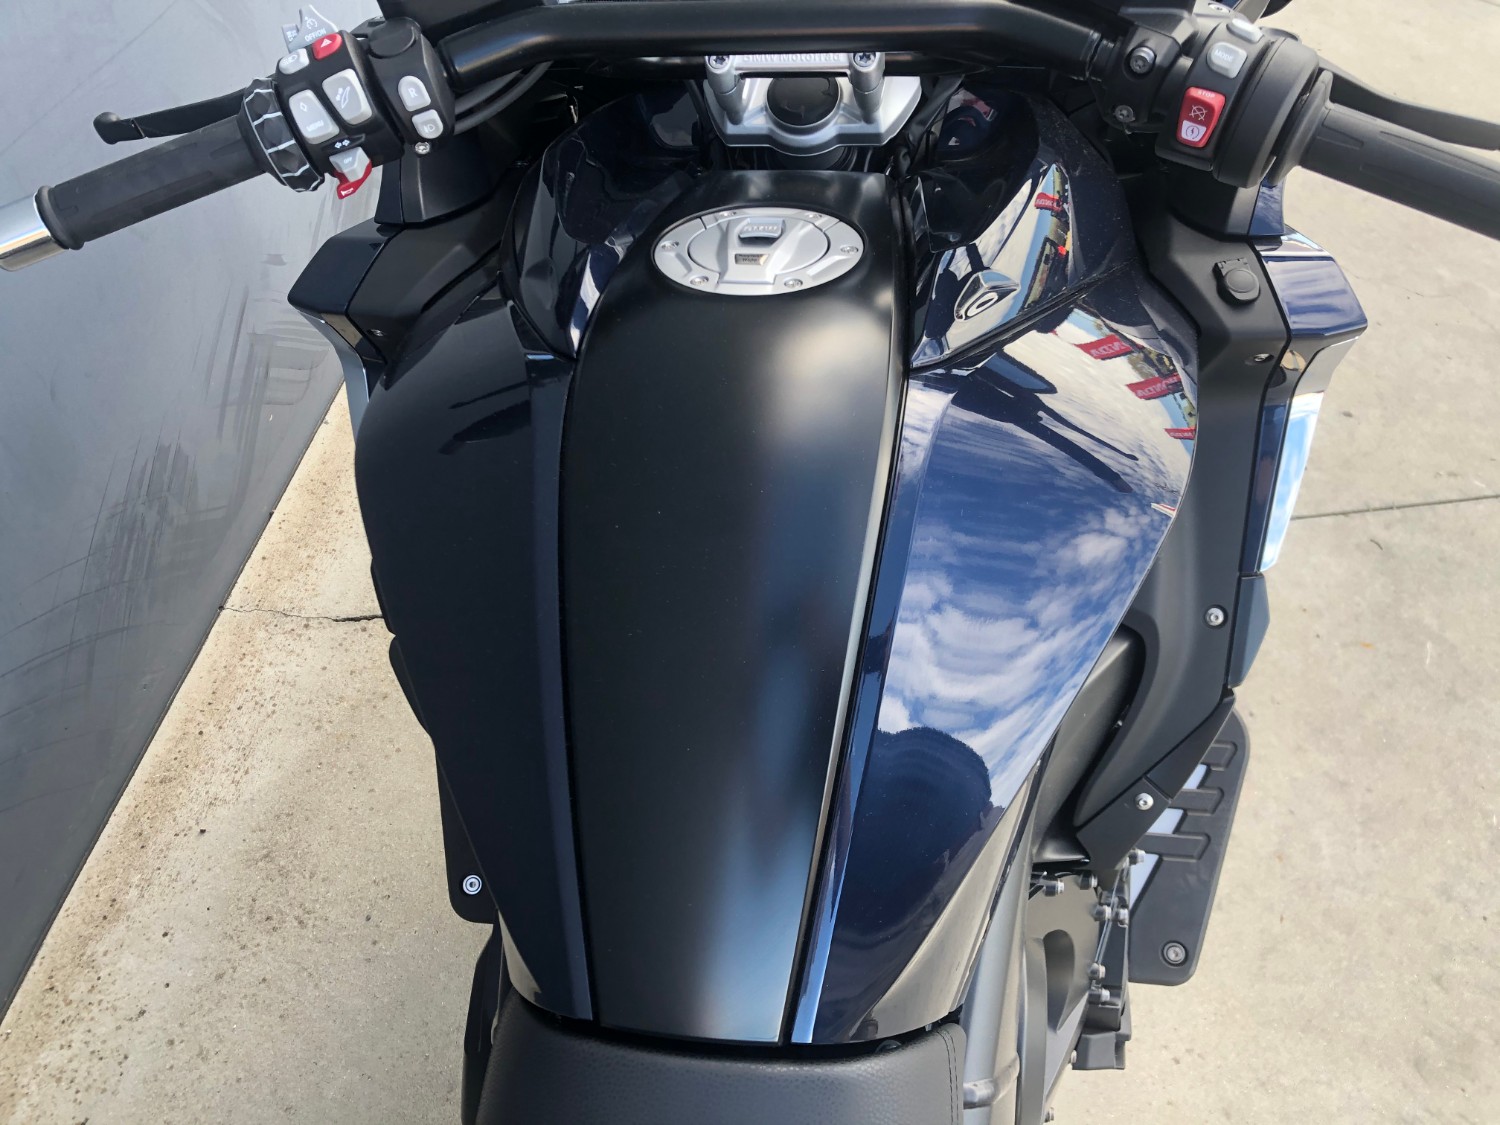 2019 BMW K1600 B Deluxe Motorcycle Image 24